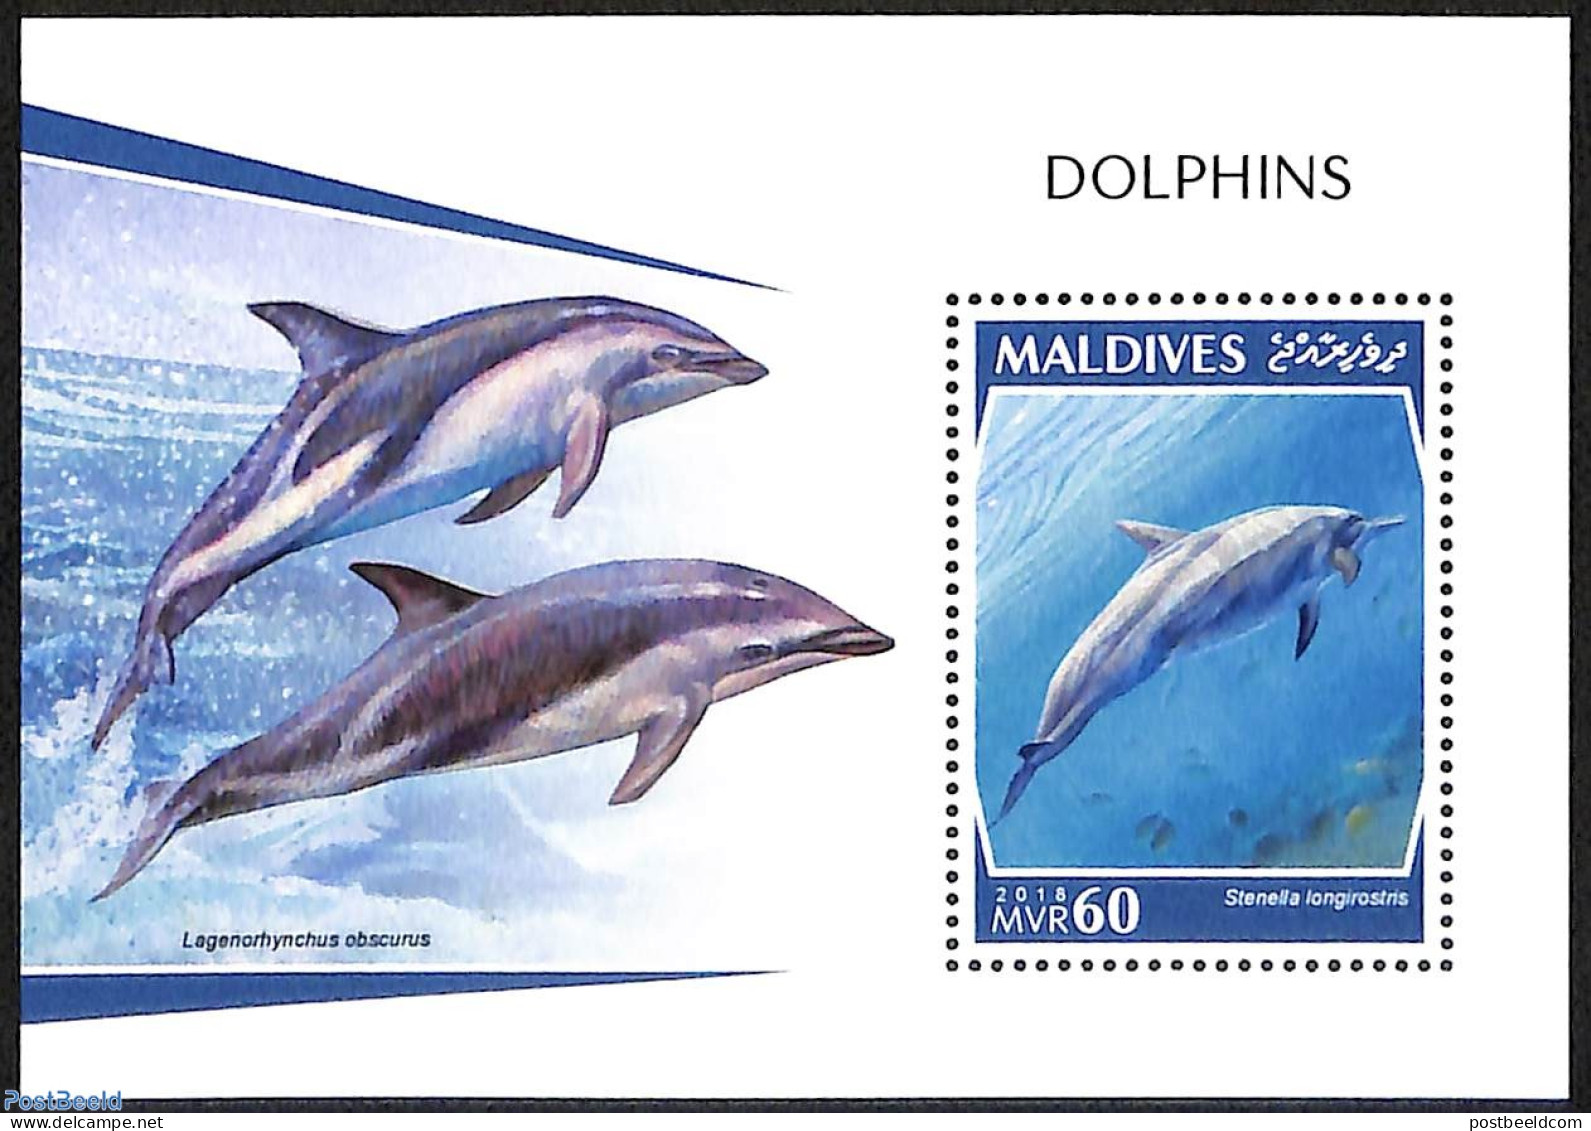 Maldives 2018 Dolphins, Mint NH, Nature - Sea Mammals - Maldives (1965-...)